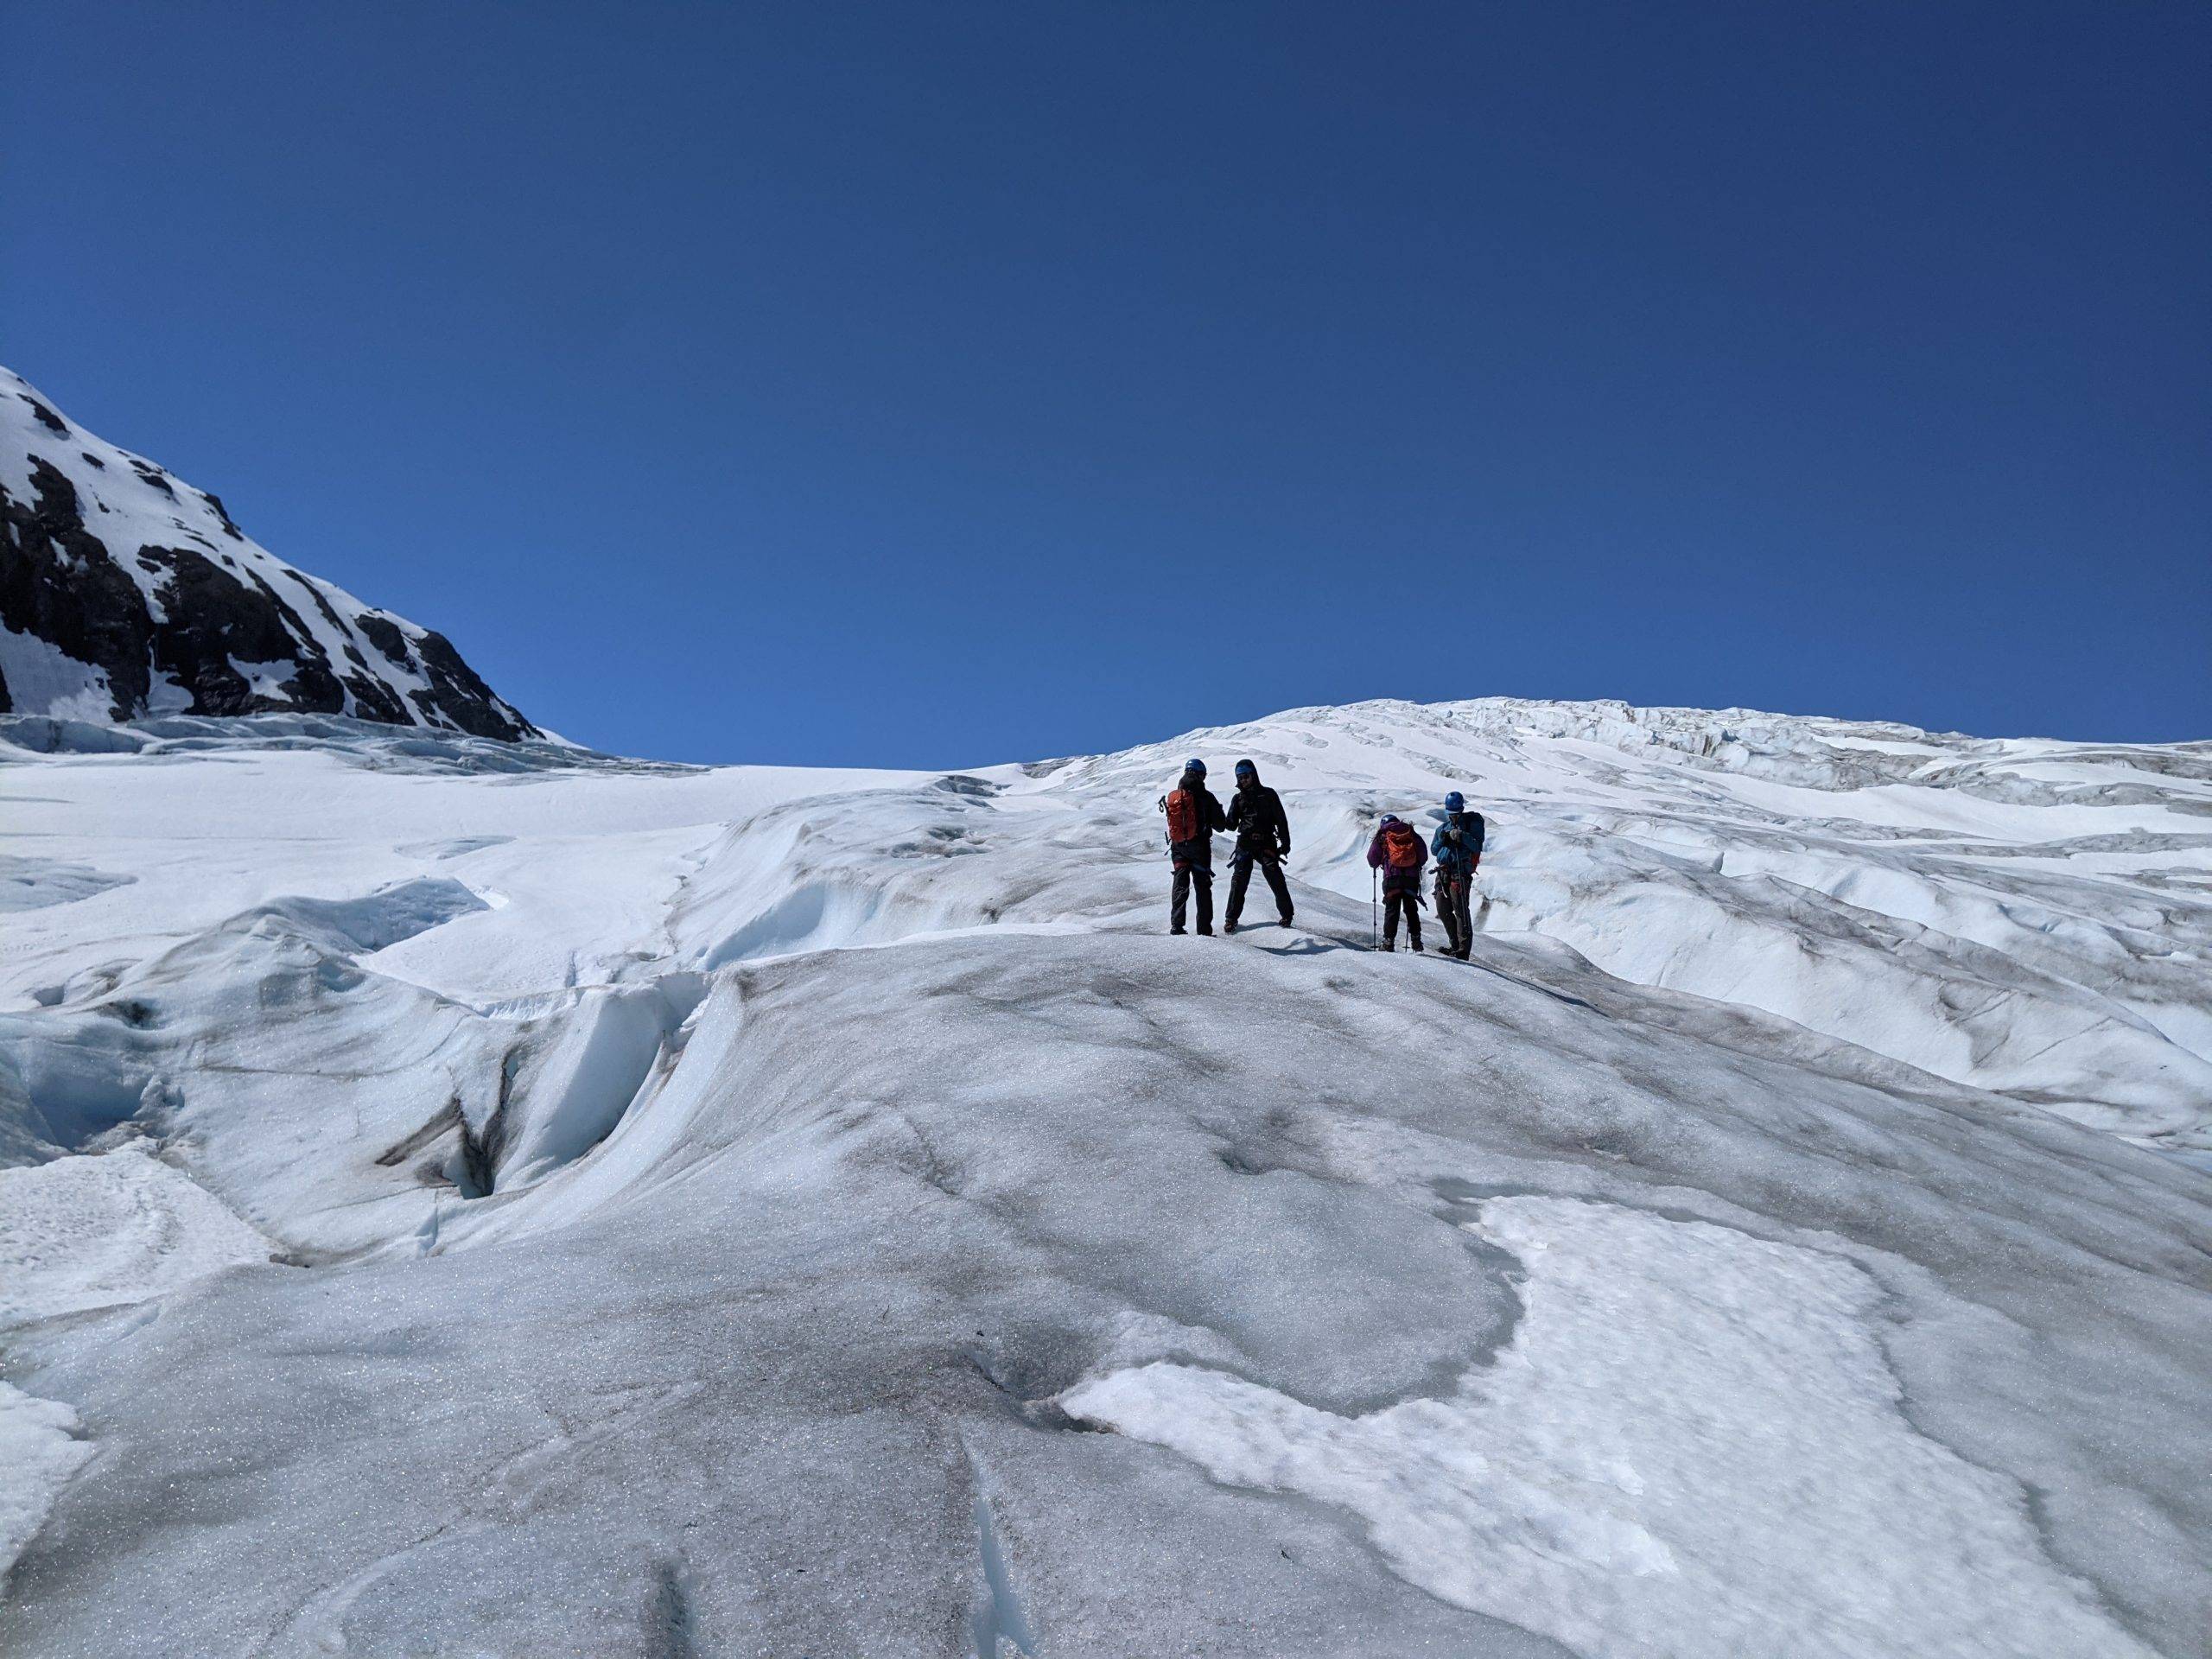 TRIP REPORT: 6/2/22 Exit Glacier Ice Hiking Adventure